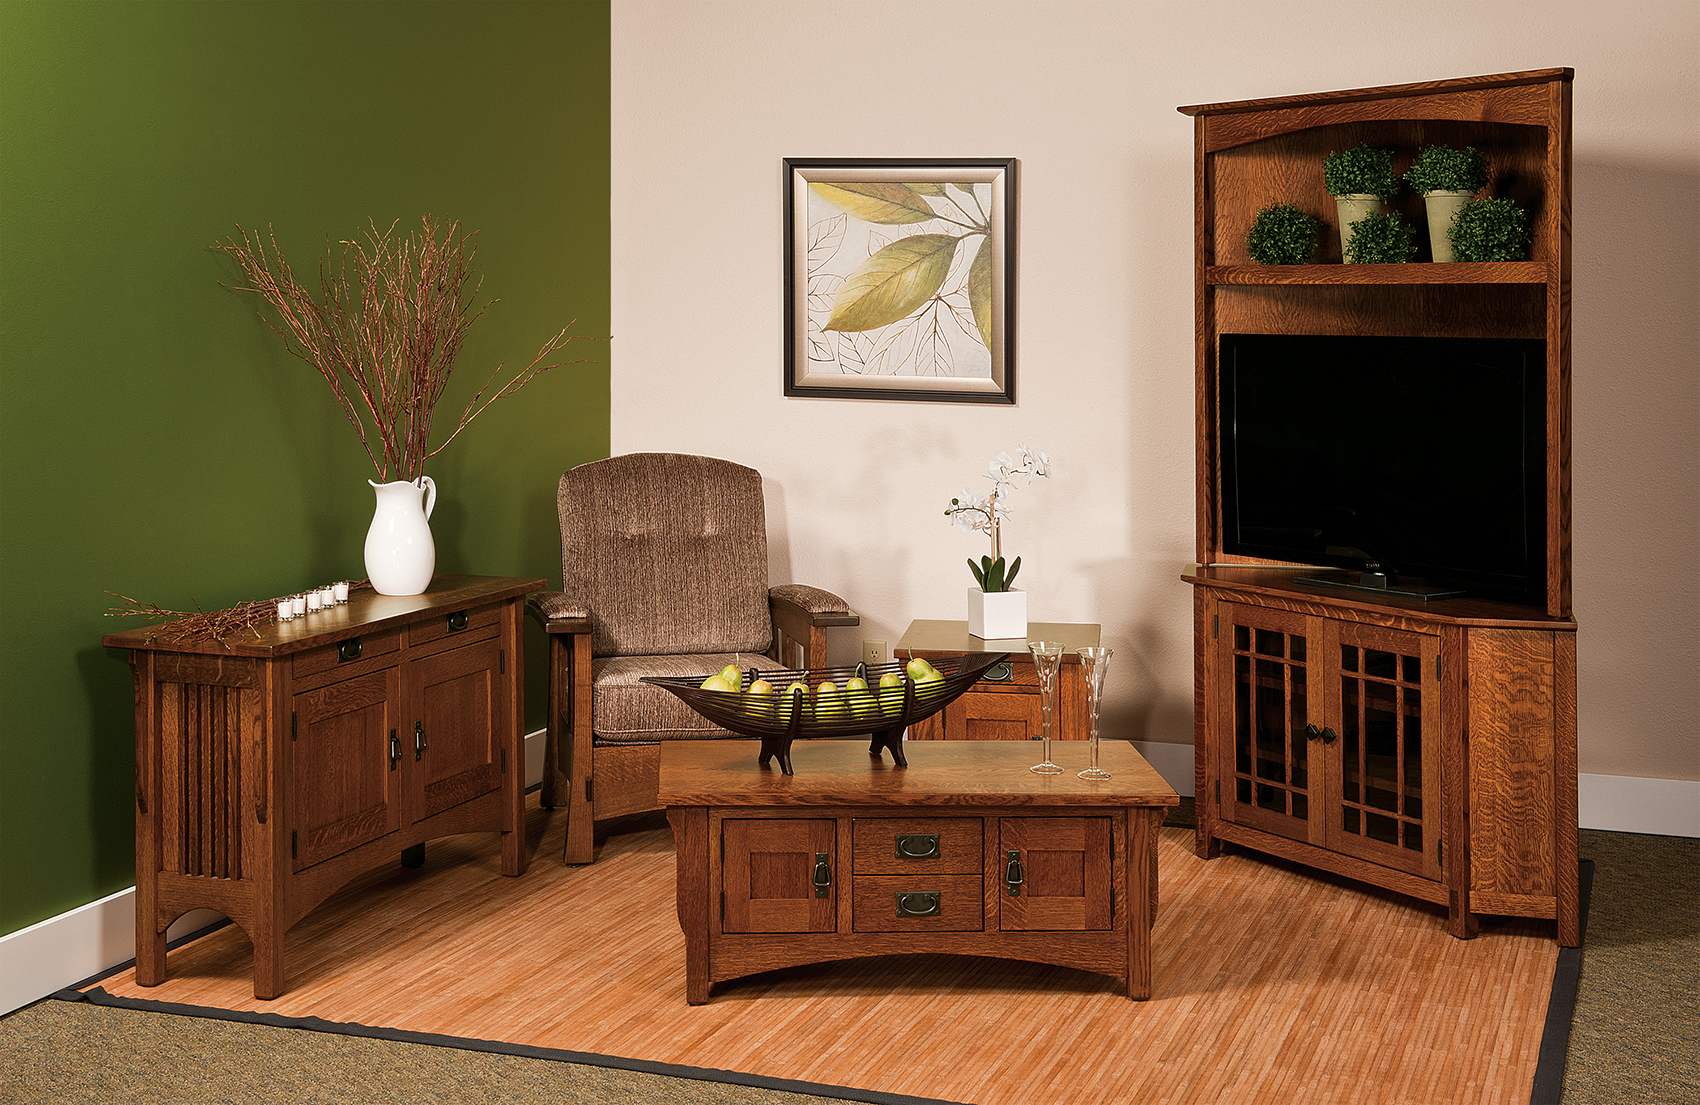 logan furniture living room